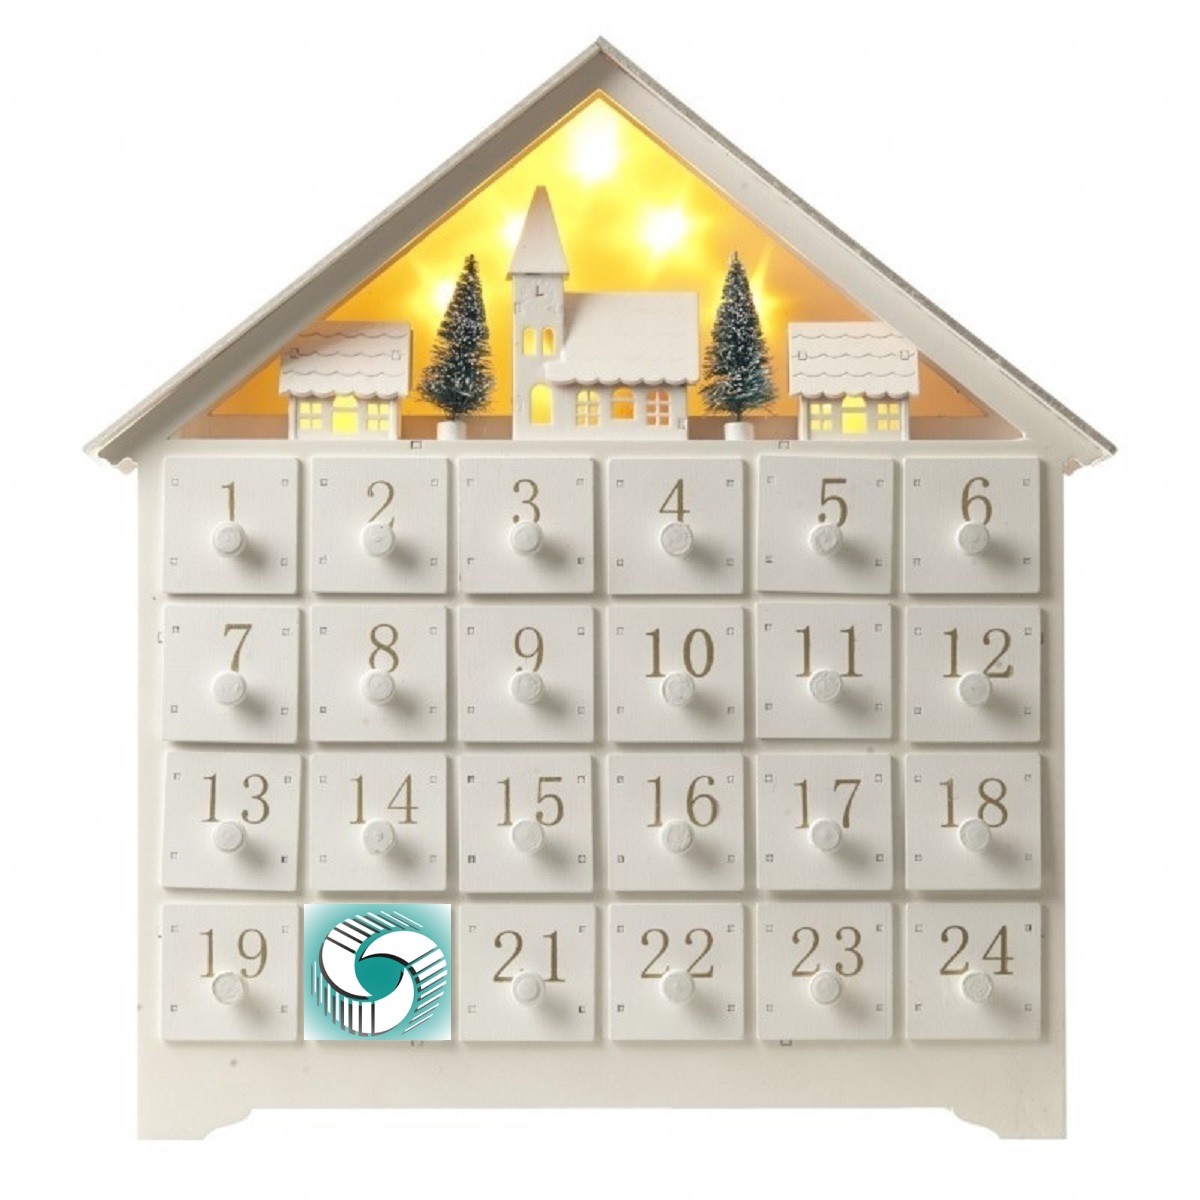 Day 20 – Frontier’s Advent Calendar